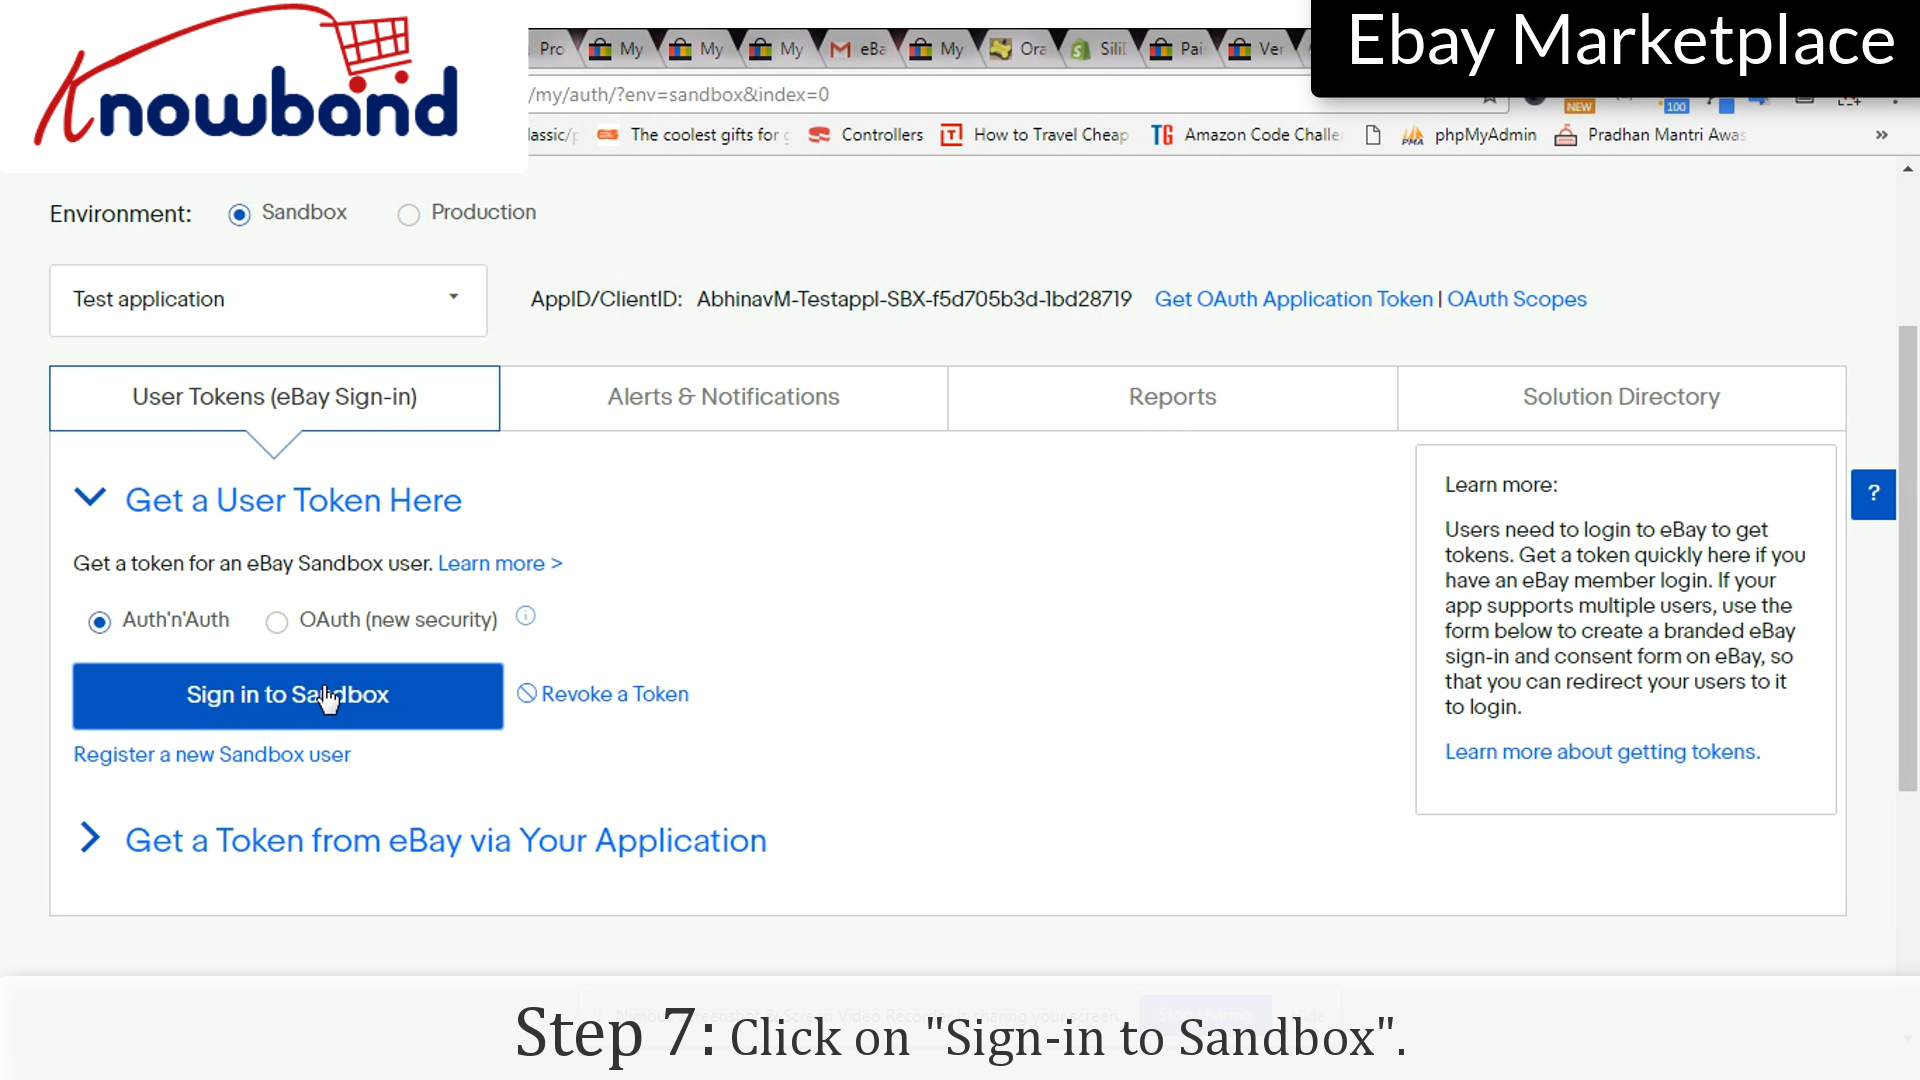 Sign-in to Sandbox